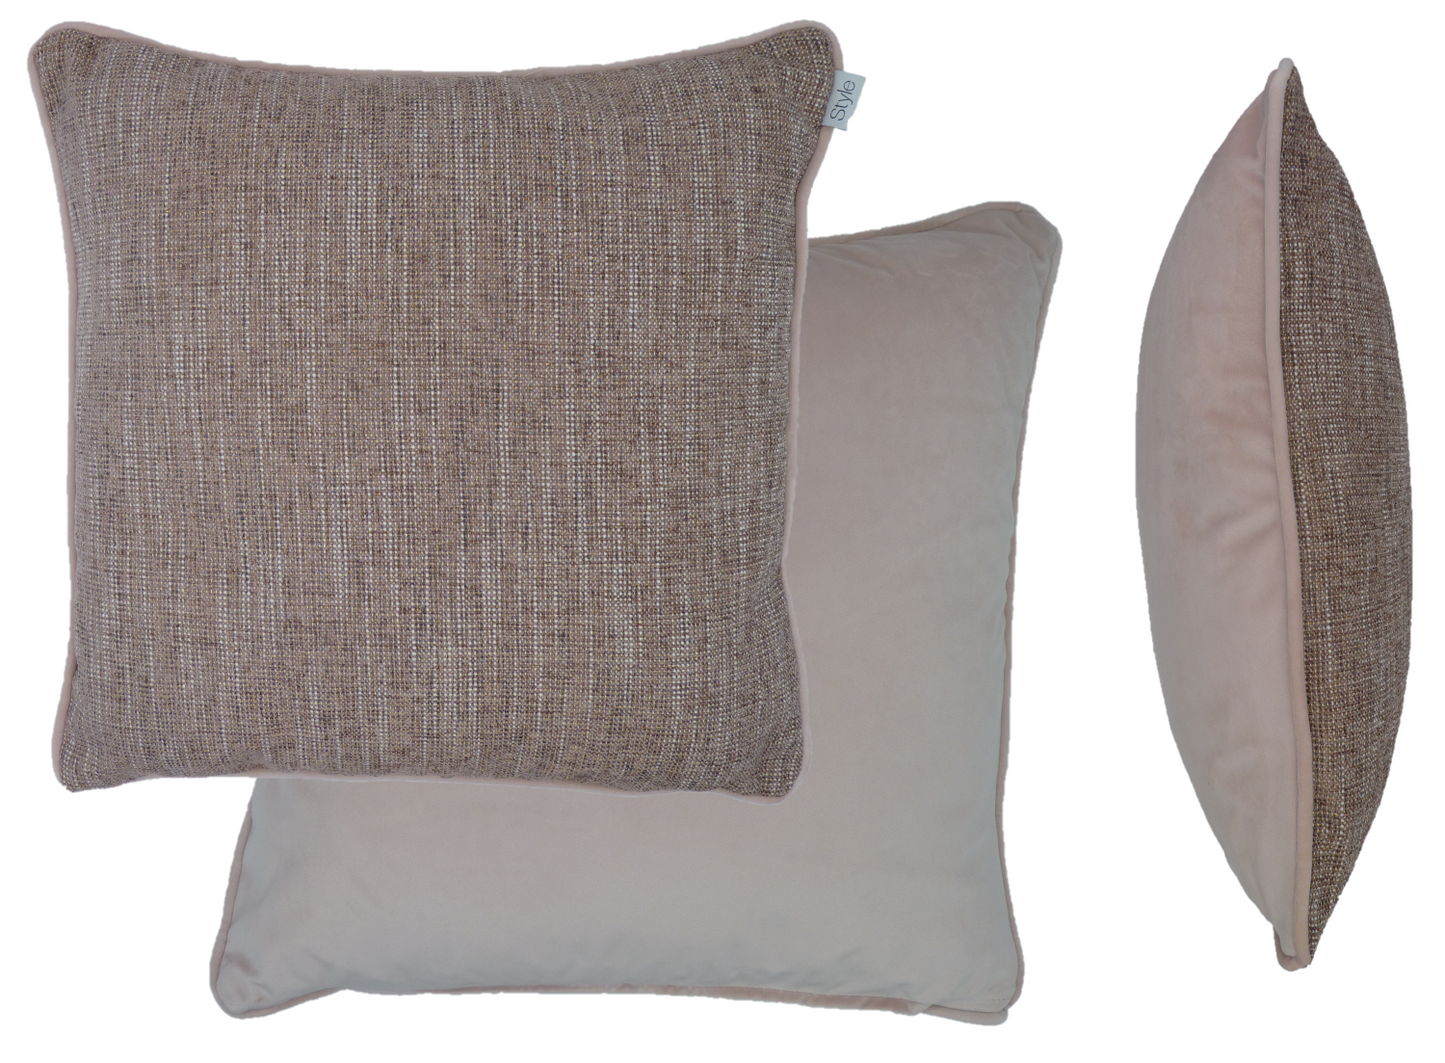 Polaris Blush Pink Textured weave Velvet Cushion (45cm x 45cm)